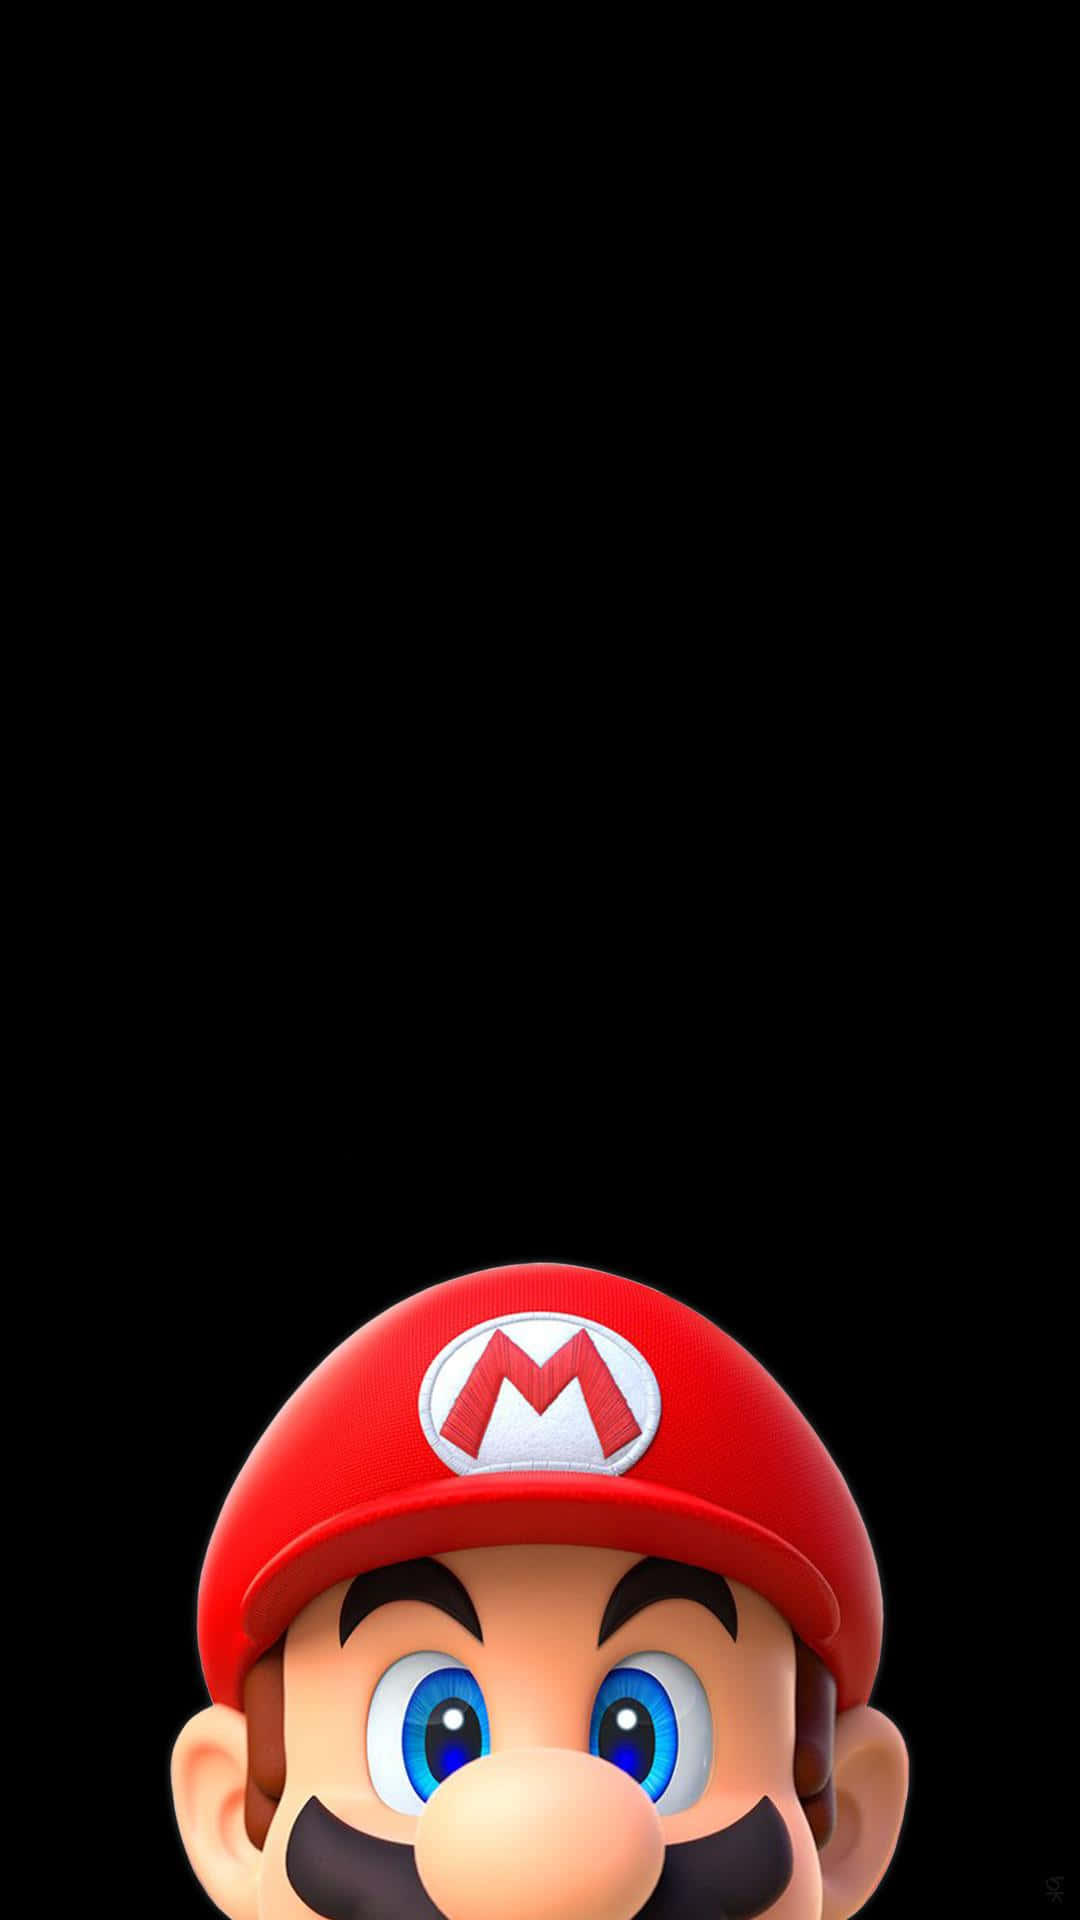 Personalizatu Propio Fondo De Pantalla De Nintendo Para Iphone. Fondo de pantalla